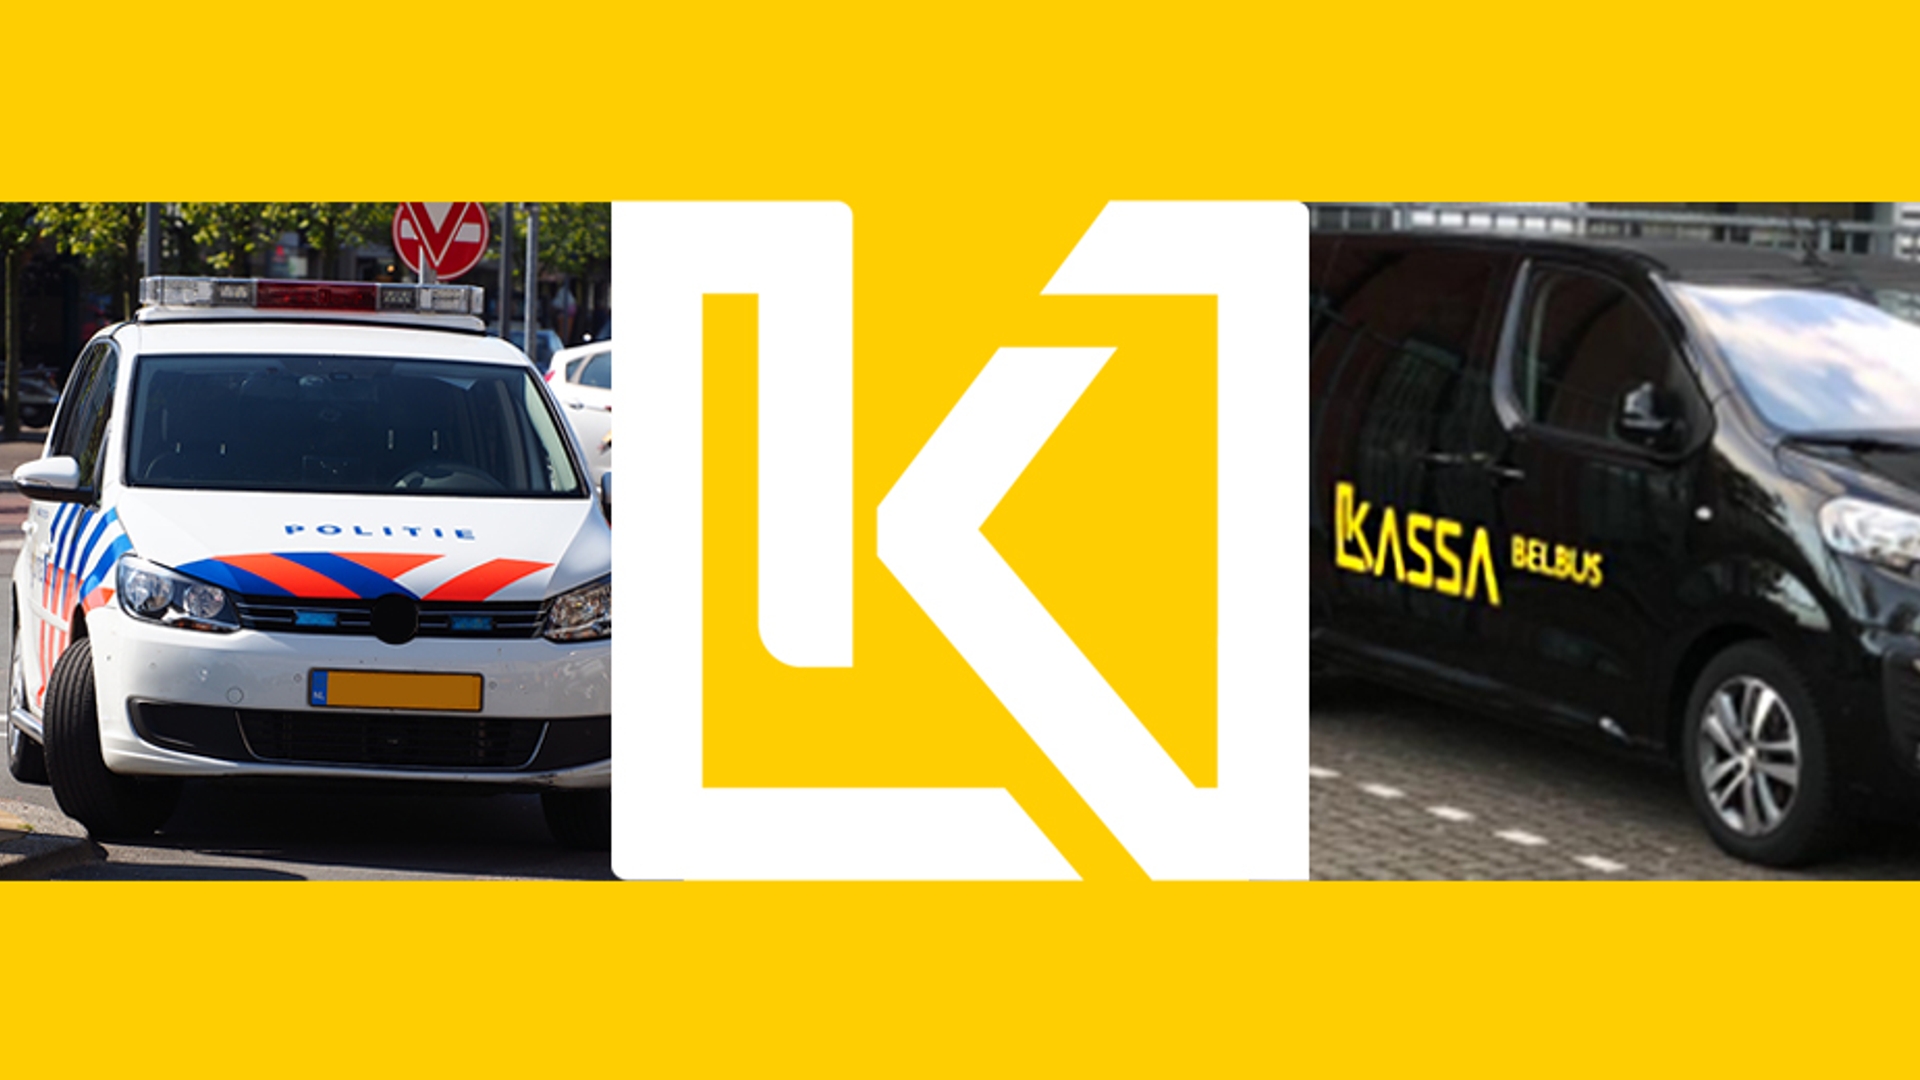 kassa oproep belbus politie 930